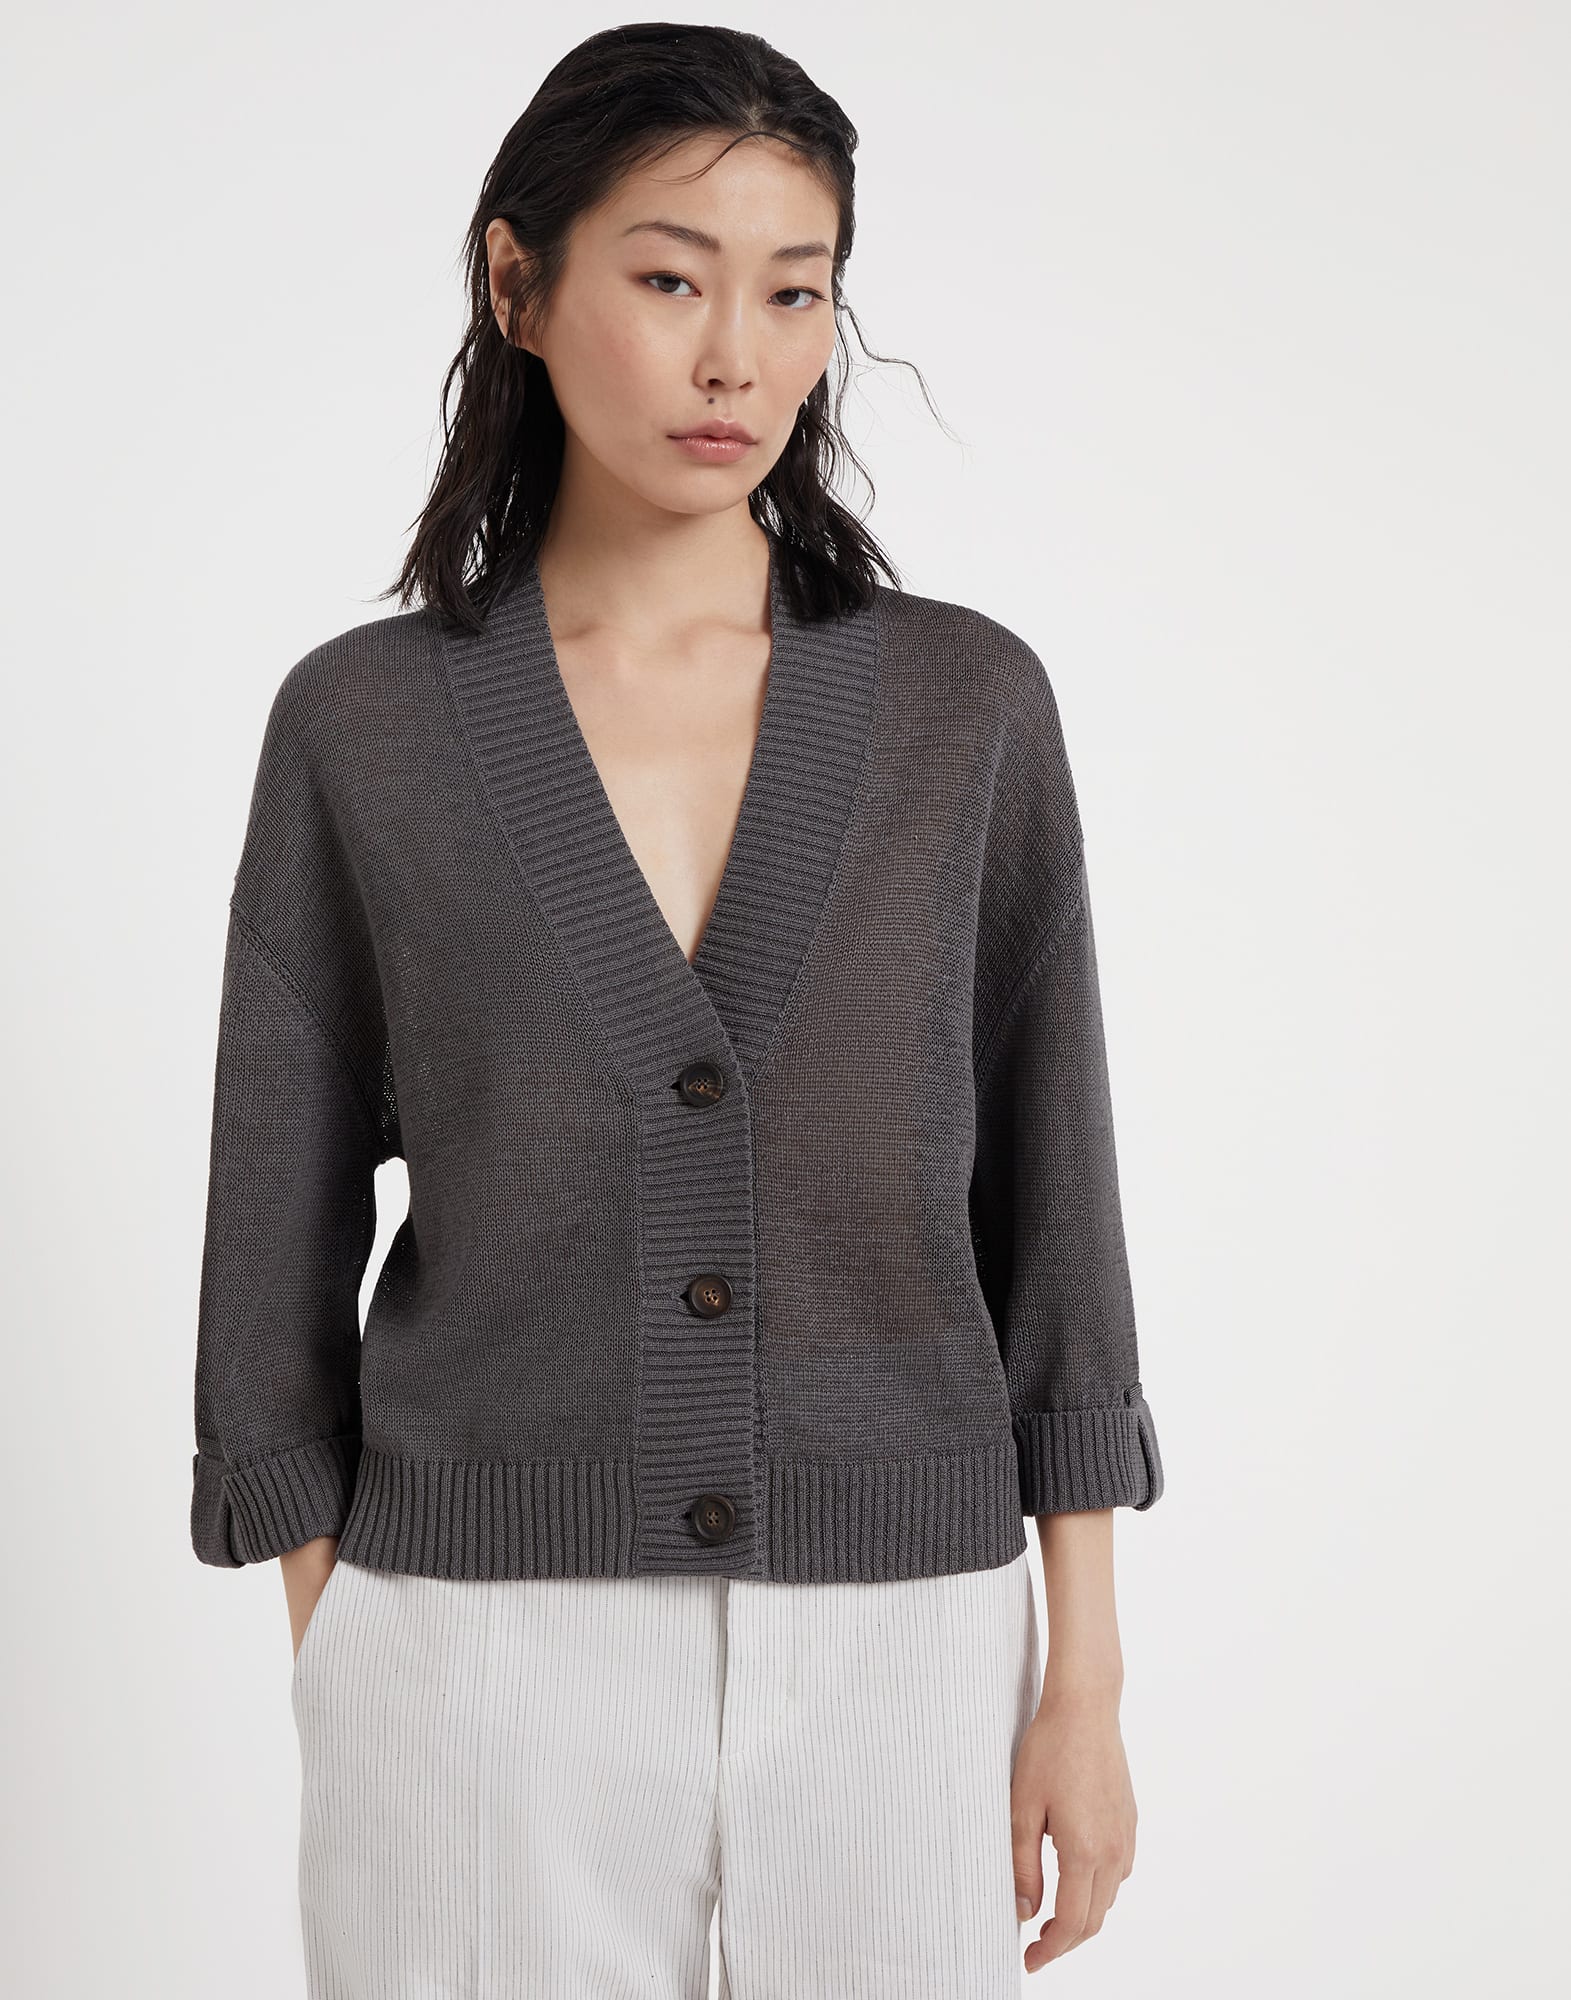 Women's knitwear: stylish sweaters and cardigans | Brunello